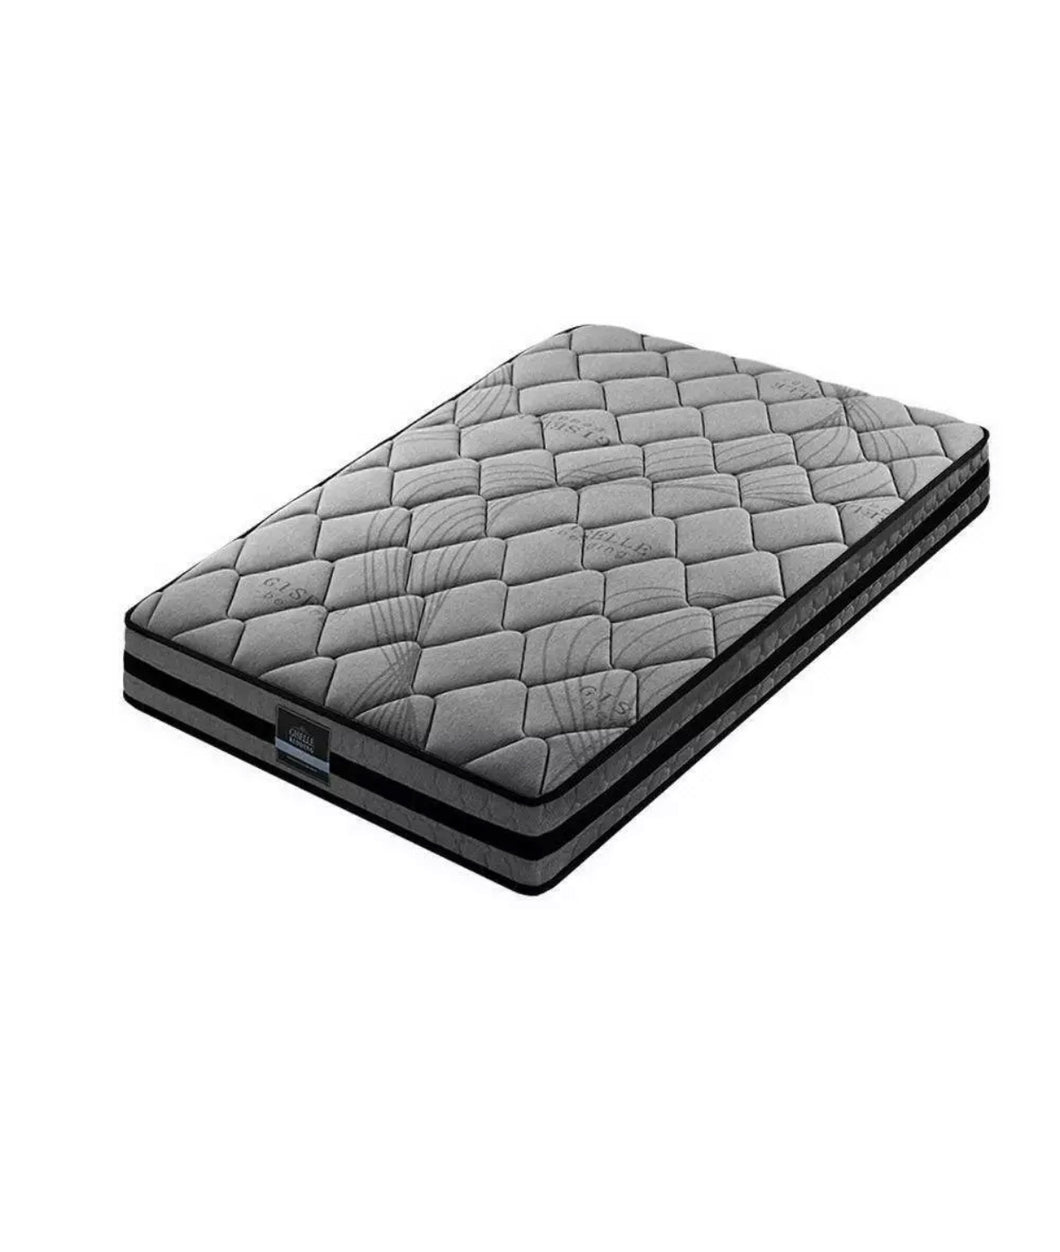 Giselle Bedding Single Size Mattress Bed Medium Firm Foam Pocket Spring 22cm Gre